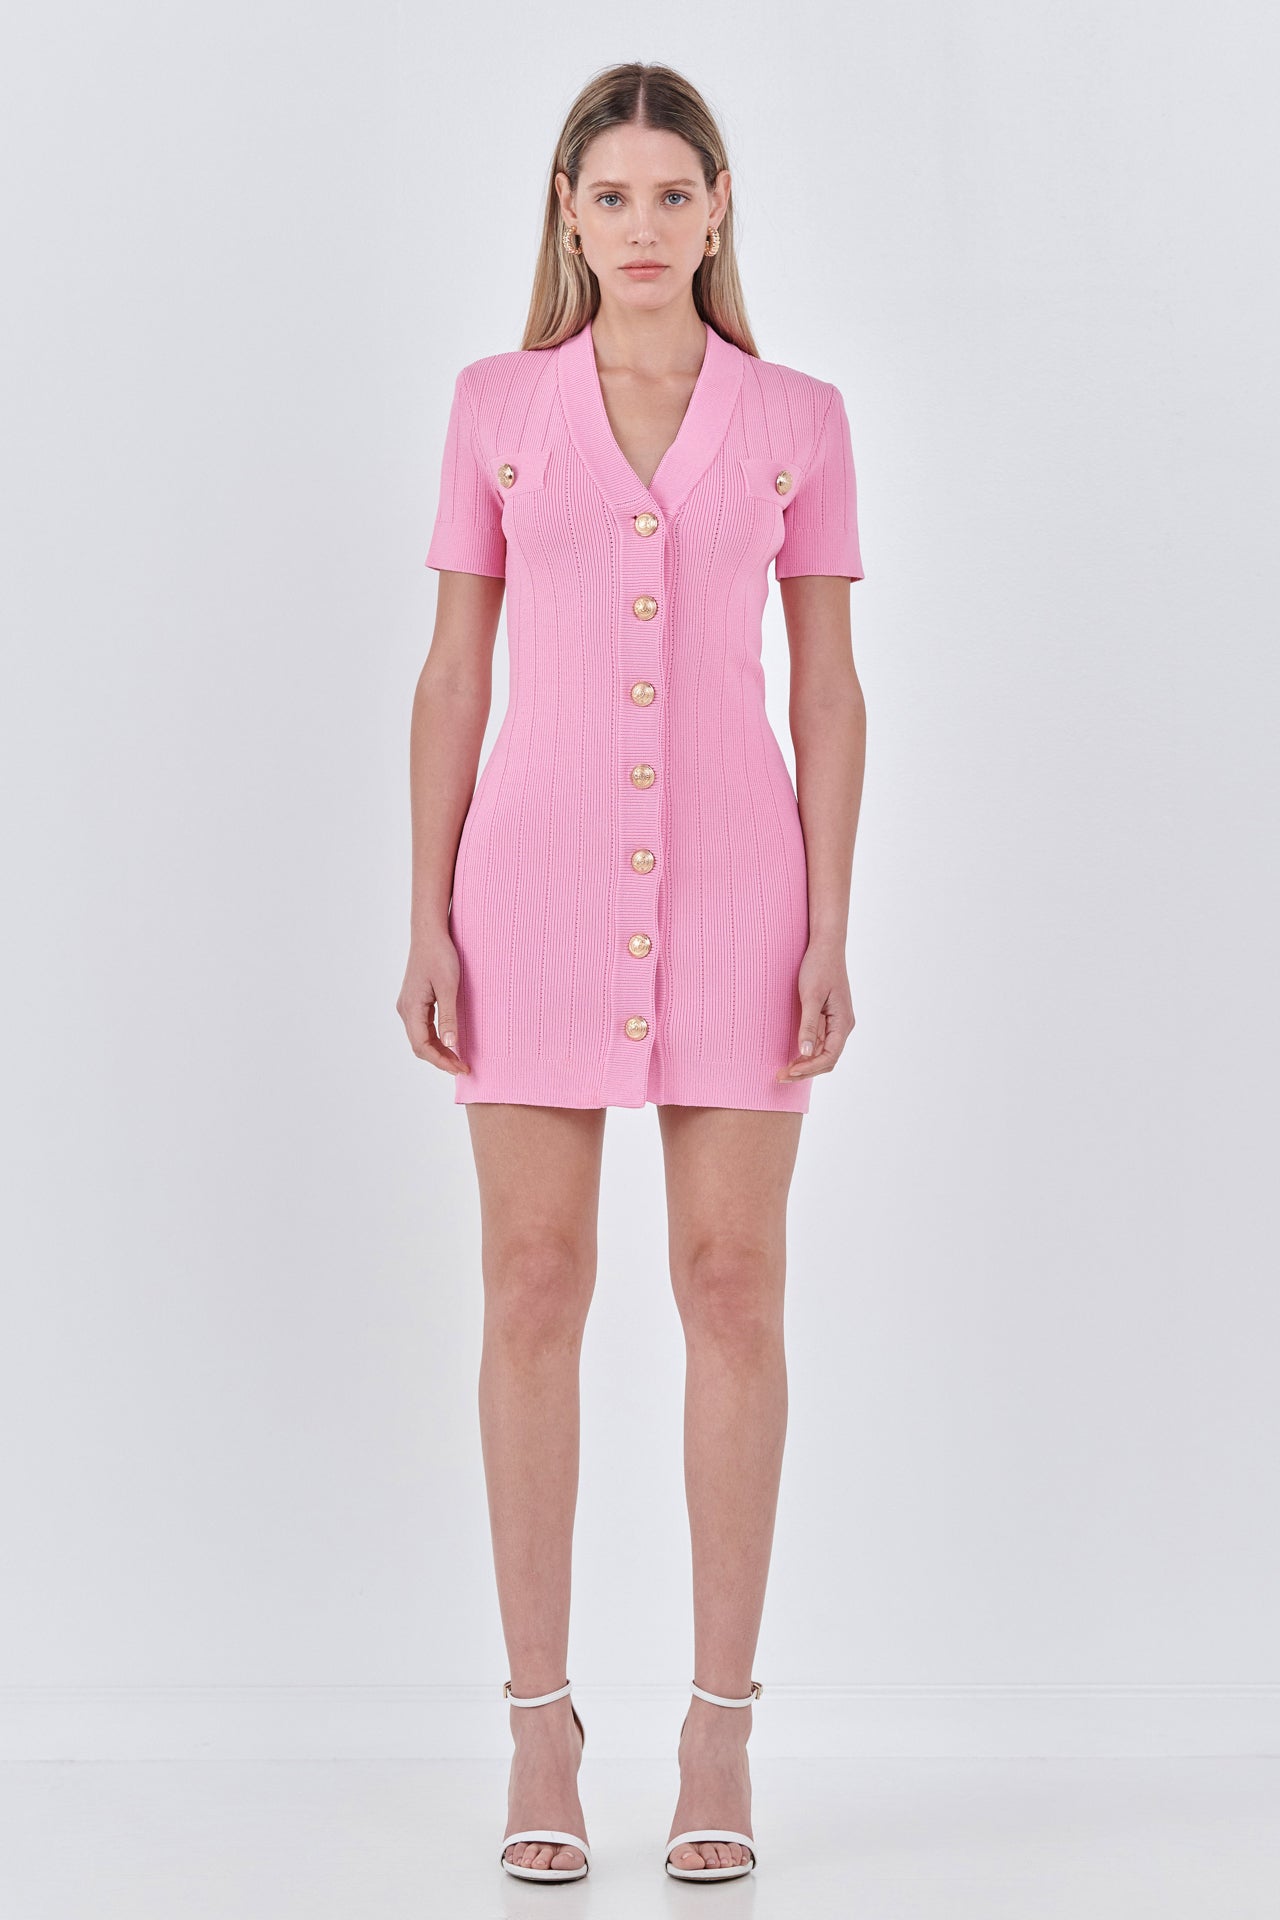 Shank Button V-neckline Knit Mini Dress - Final Sale